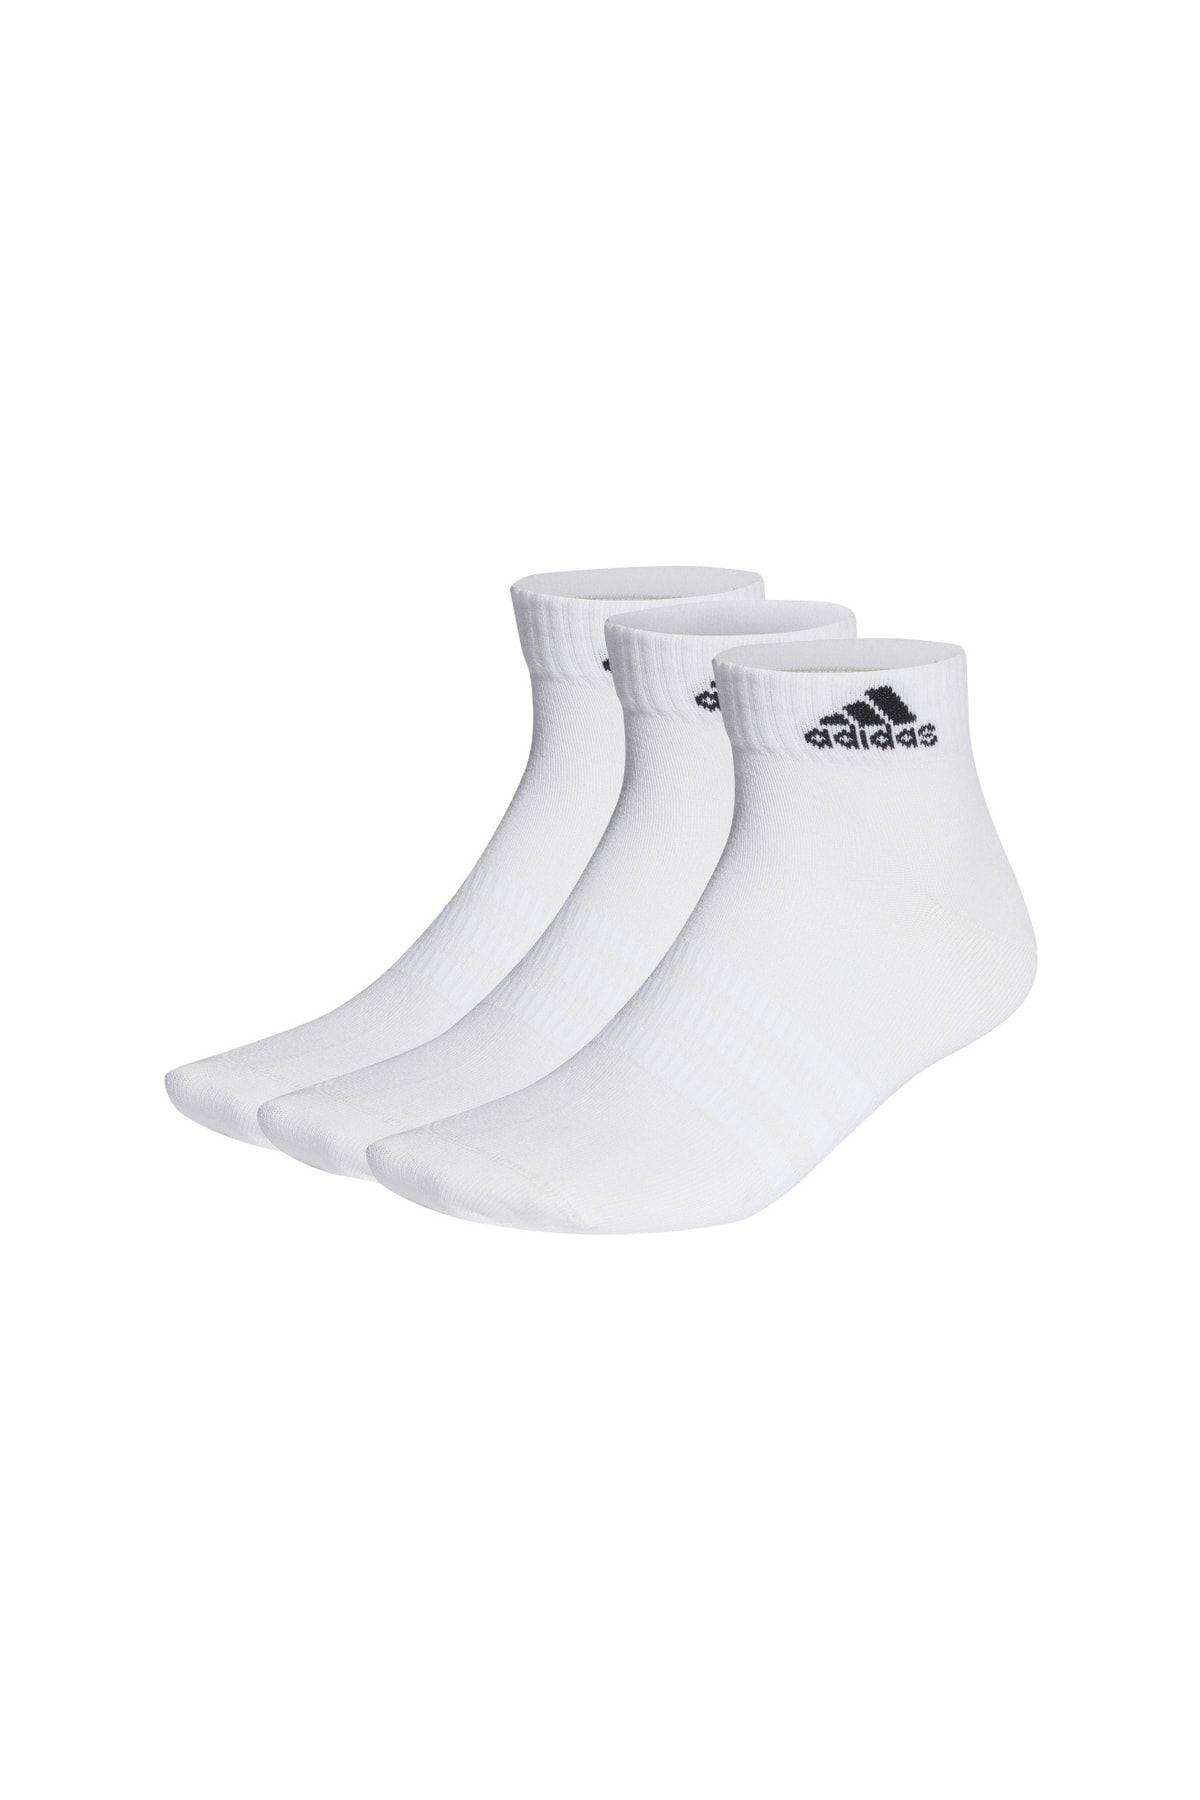 adidas Beyaz - Siyah Unisex Spor Çorap Ht3468 T Spw Ank 3p